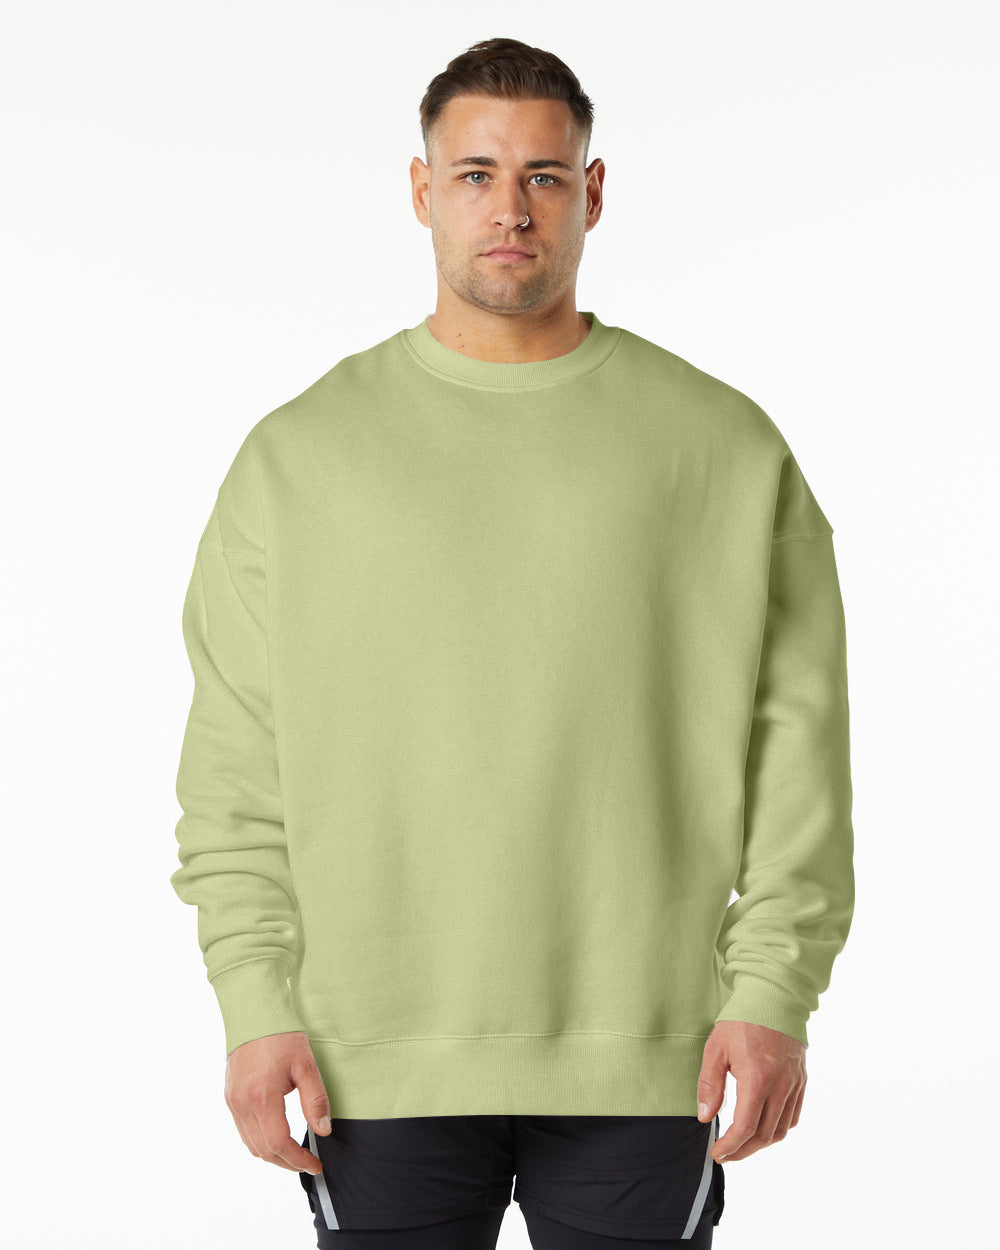 400G plus fleece thick round neck loose shoulders oversize hoodie 6 colors